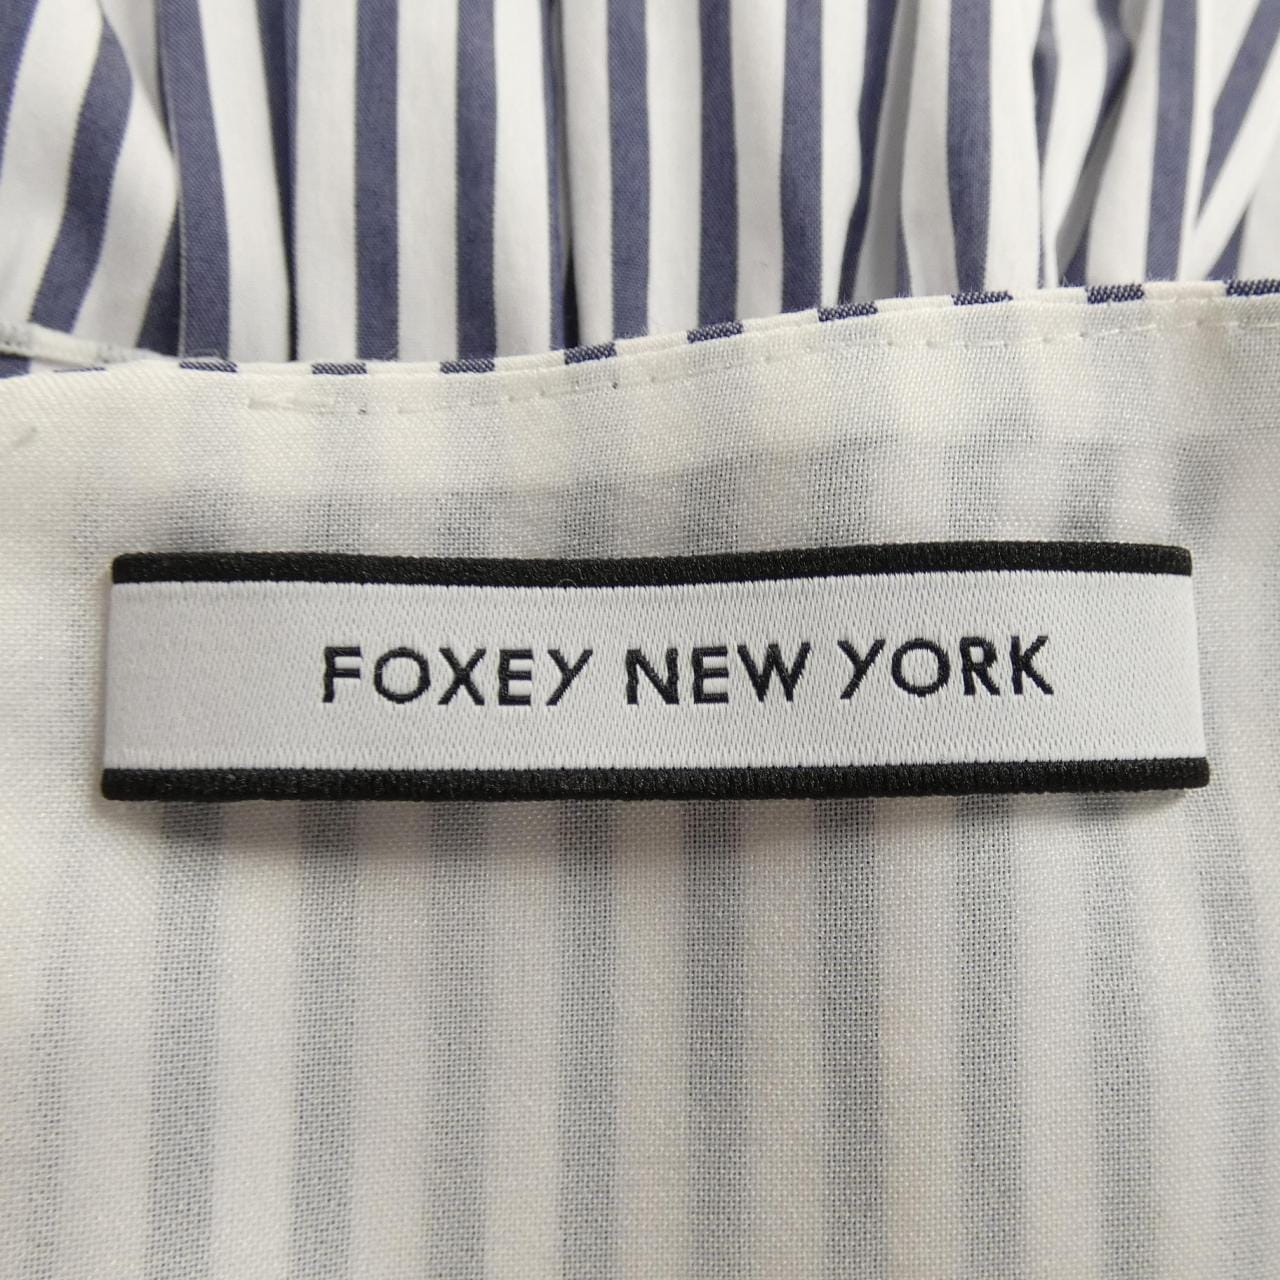 Foxy New York FOXEY NEW YORK dress